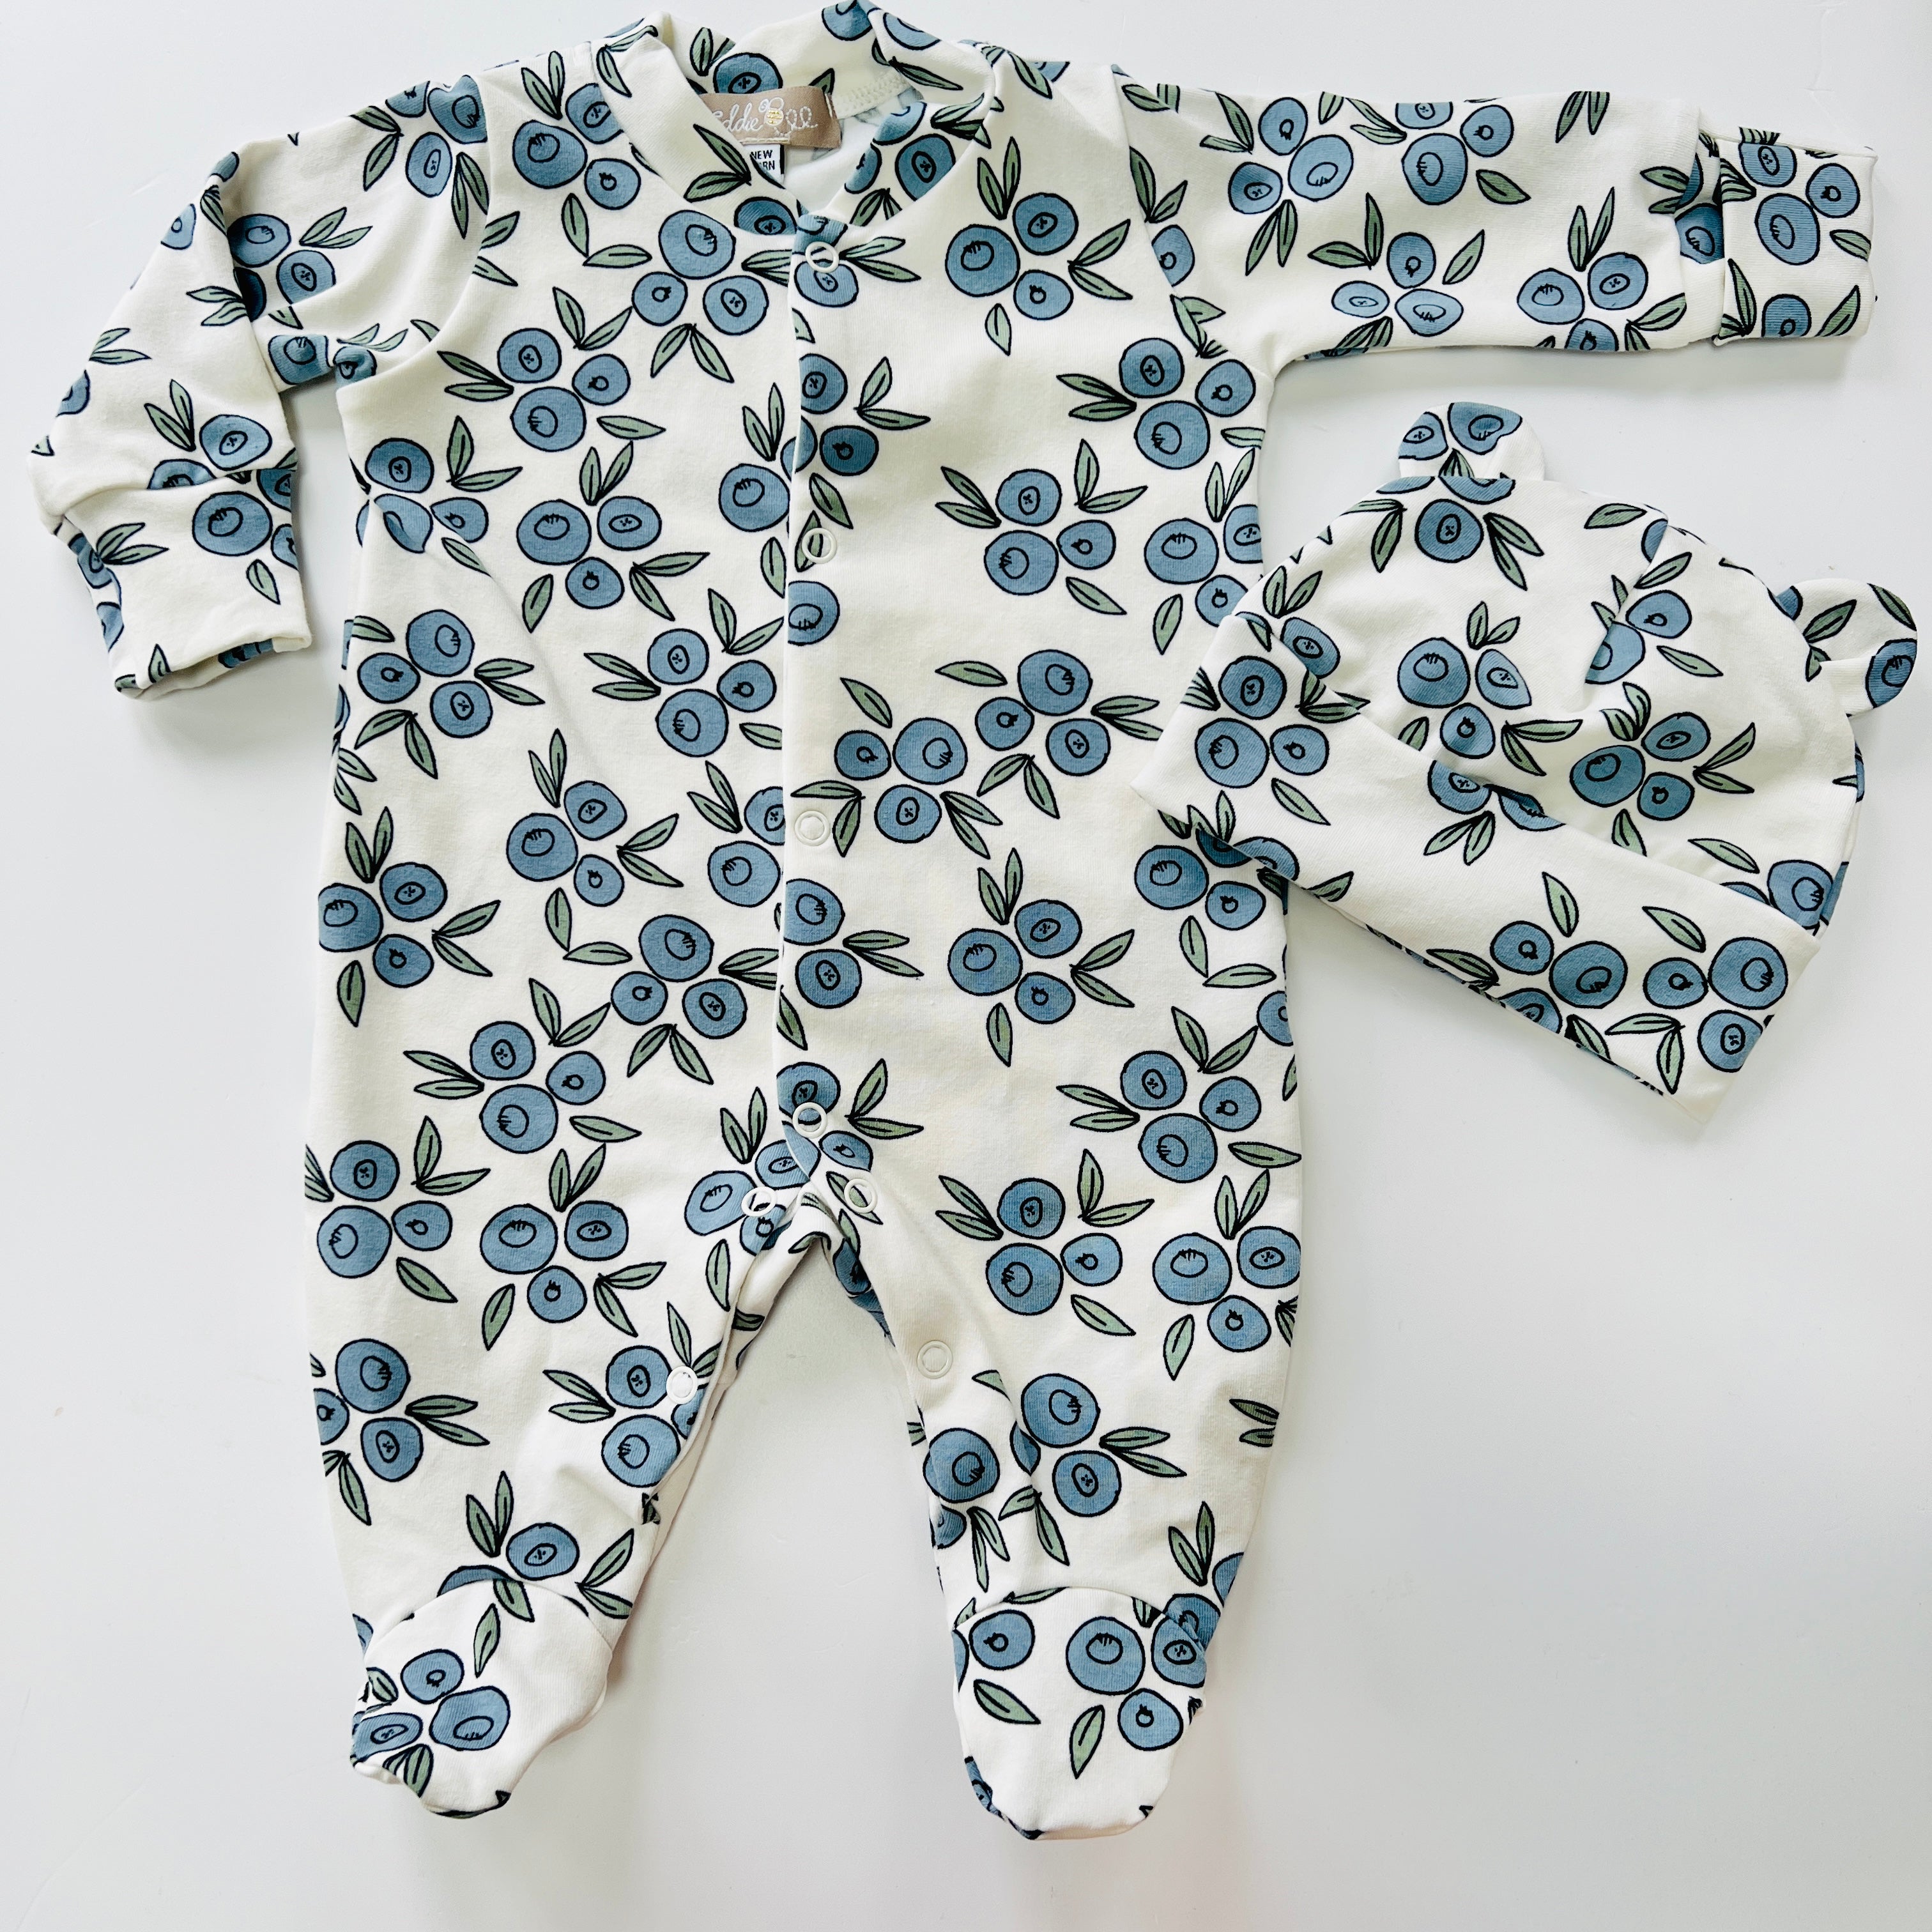 Eddie & Bee organic cotton Baby sleepsuit  in Cream " Blueberry " print.